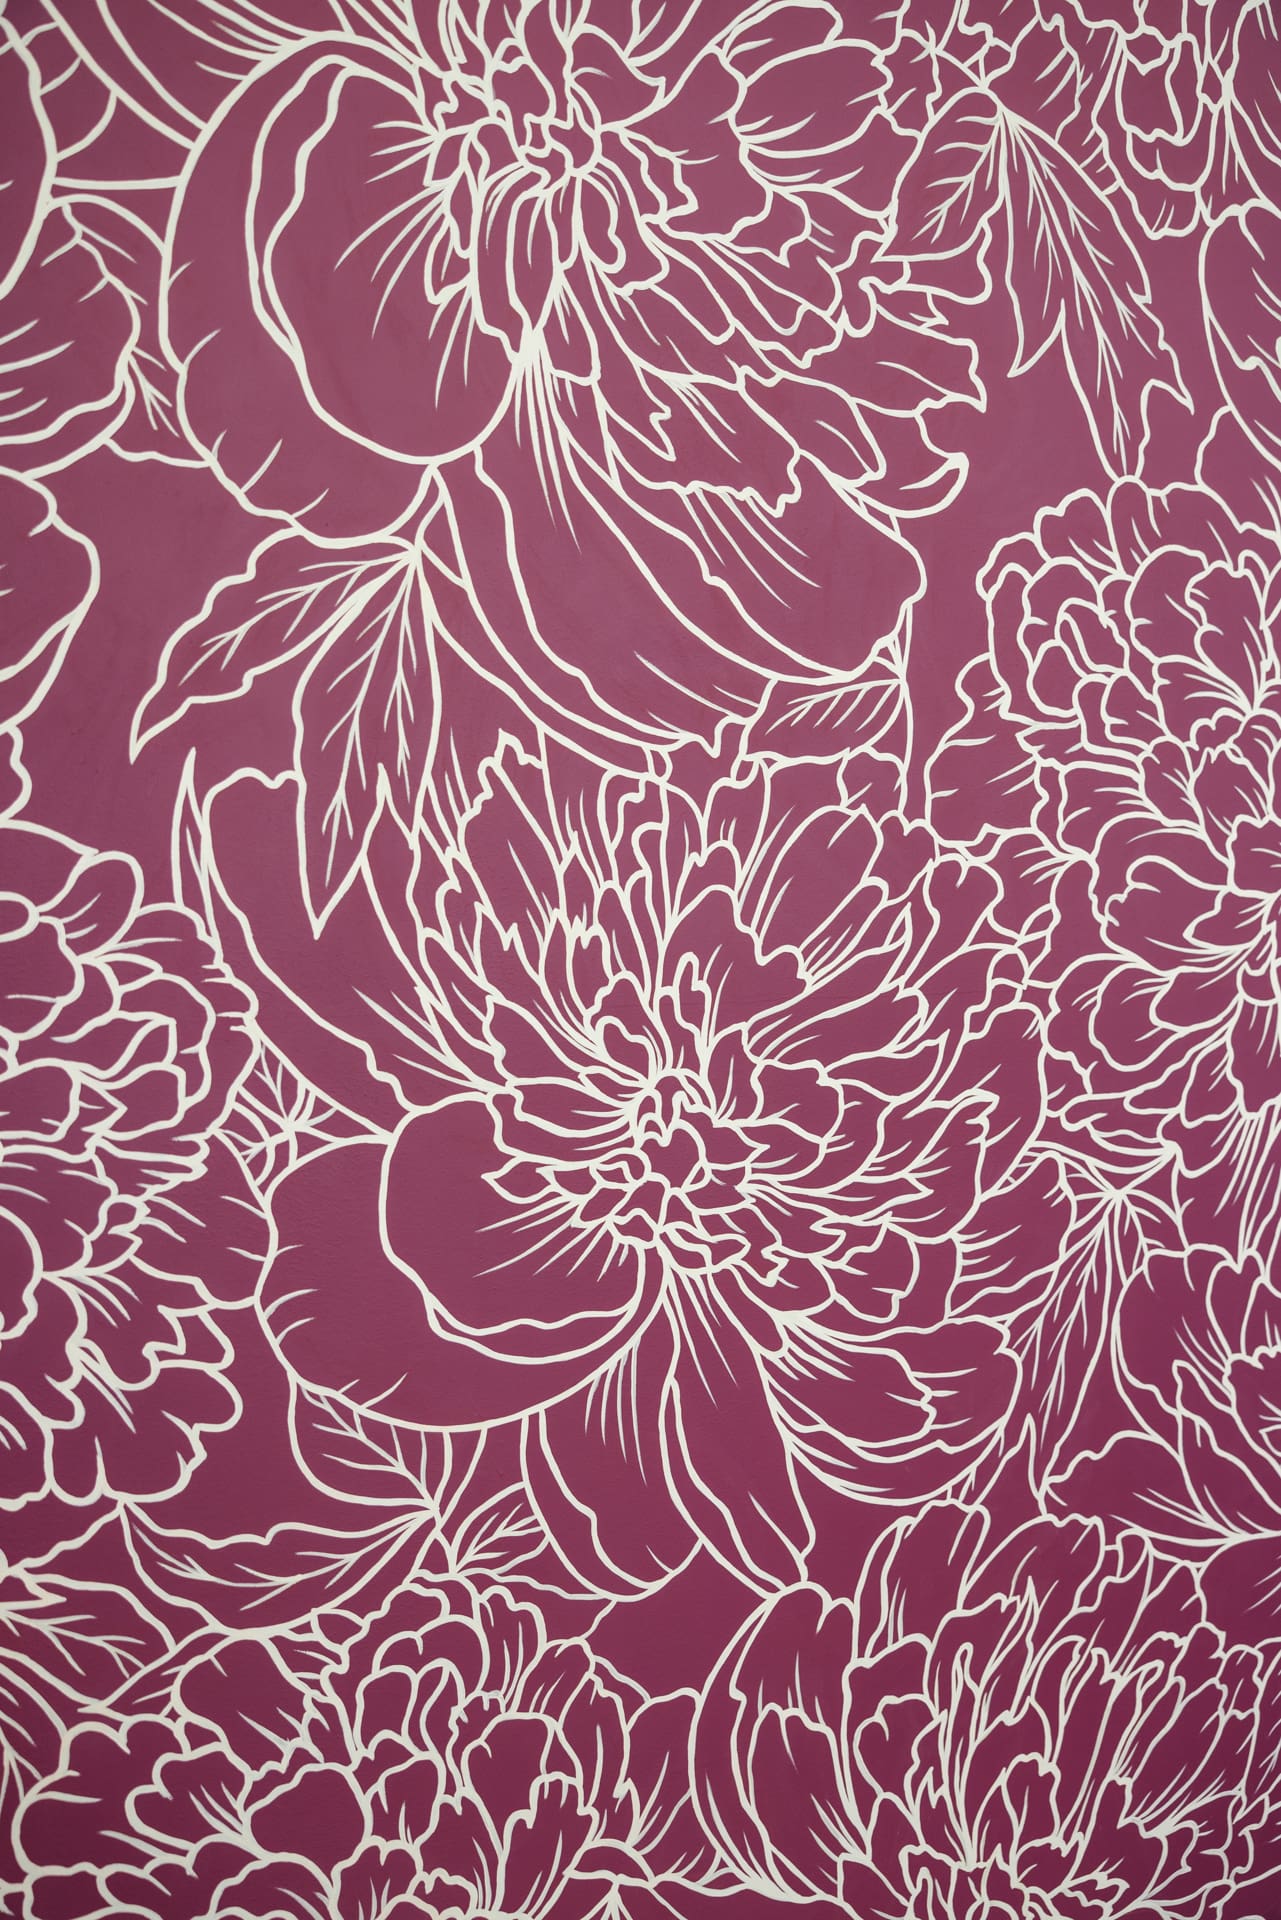 Detail photo of custom floral mural in Raspberry Crush inside natural light photography studio P&M Studio Chicago